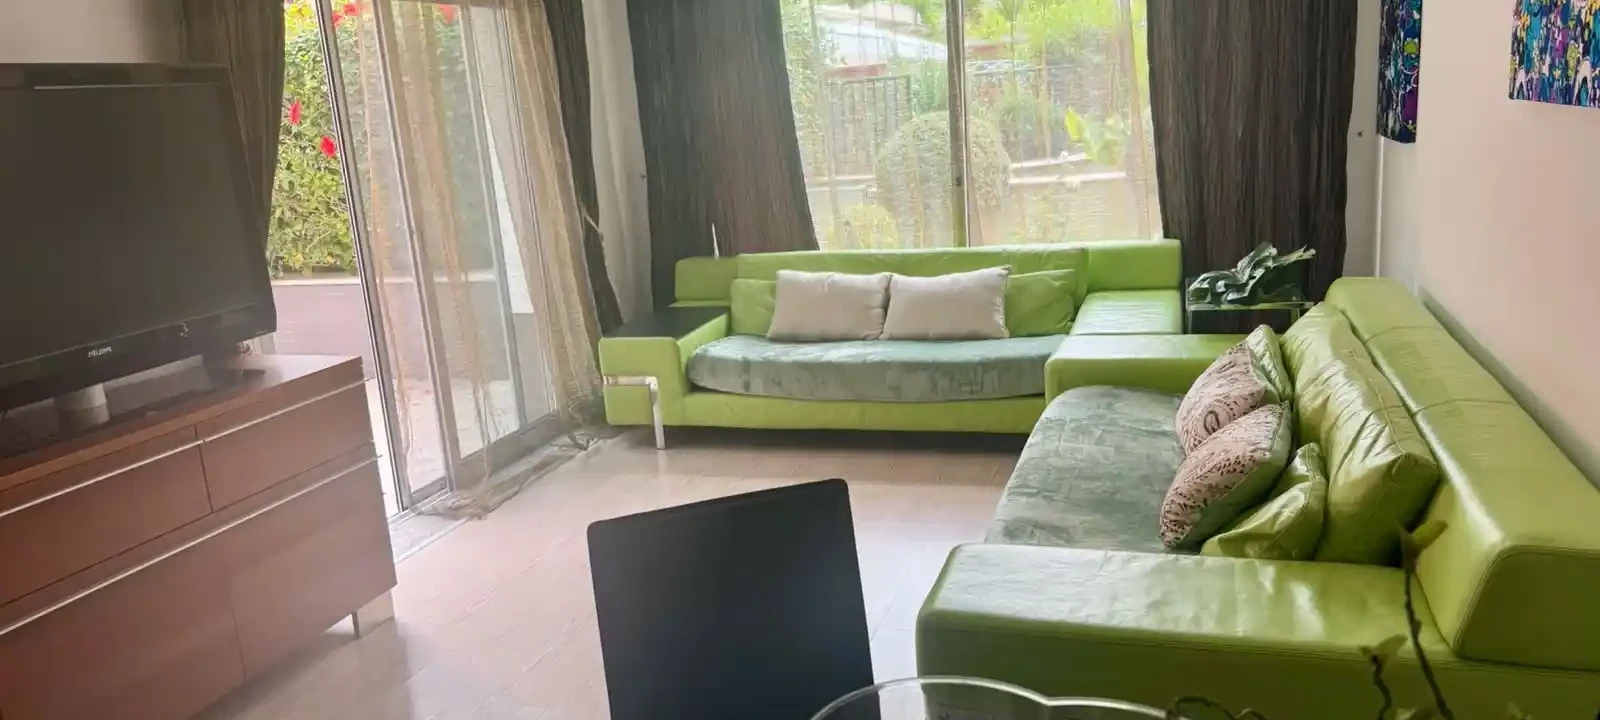 3-bedroom maisonette to rent €4.000, image 1